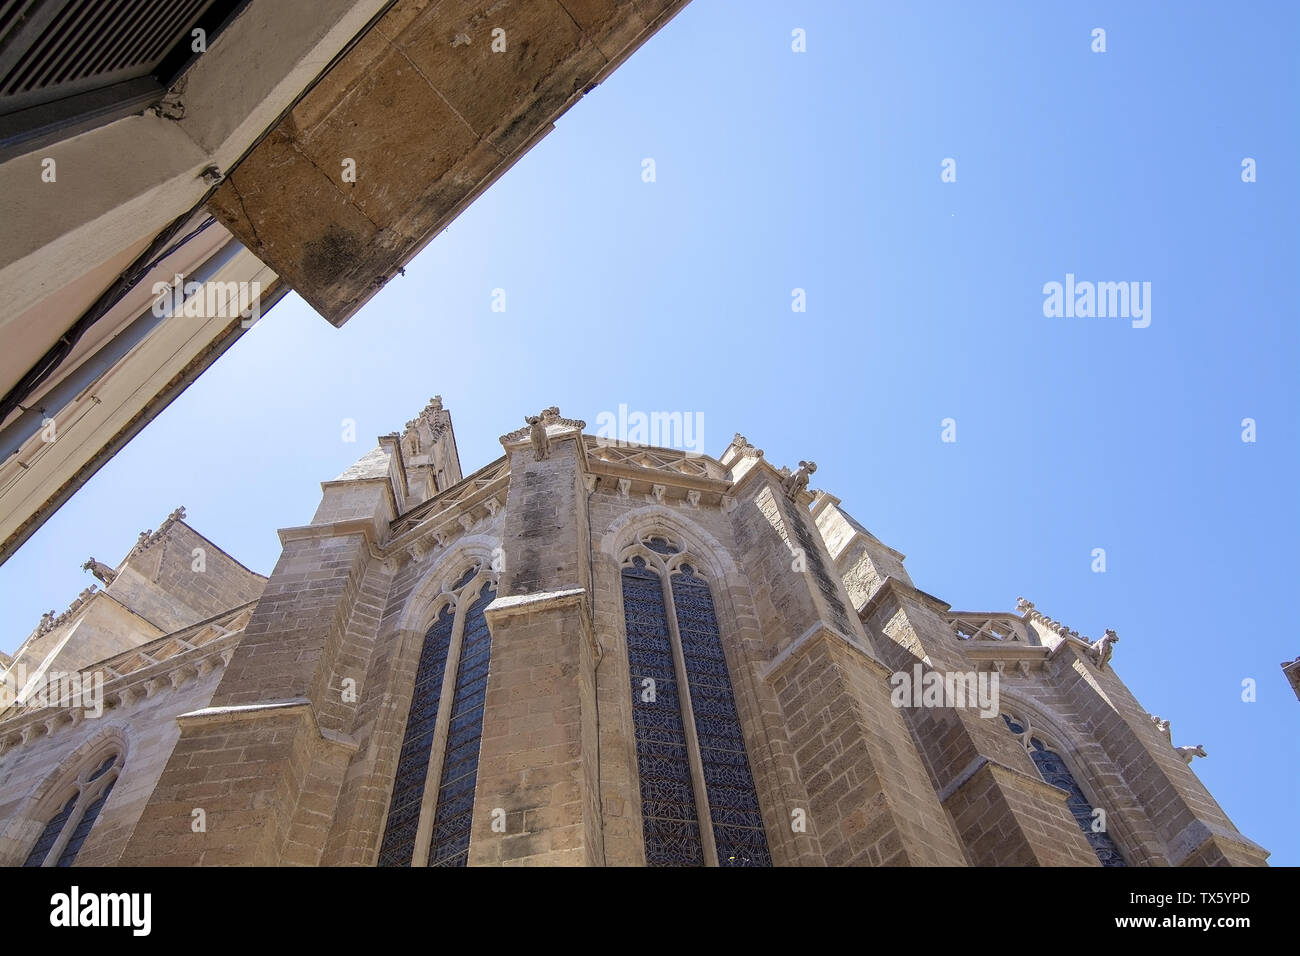 PALMA DE MALLORCA, España - 20 de mayo de 2019: la Basílica de Sant Francesc detalle contra el cielo el 20 de mayo de 2019 en Palma de Mallorca, España. Foto de stock